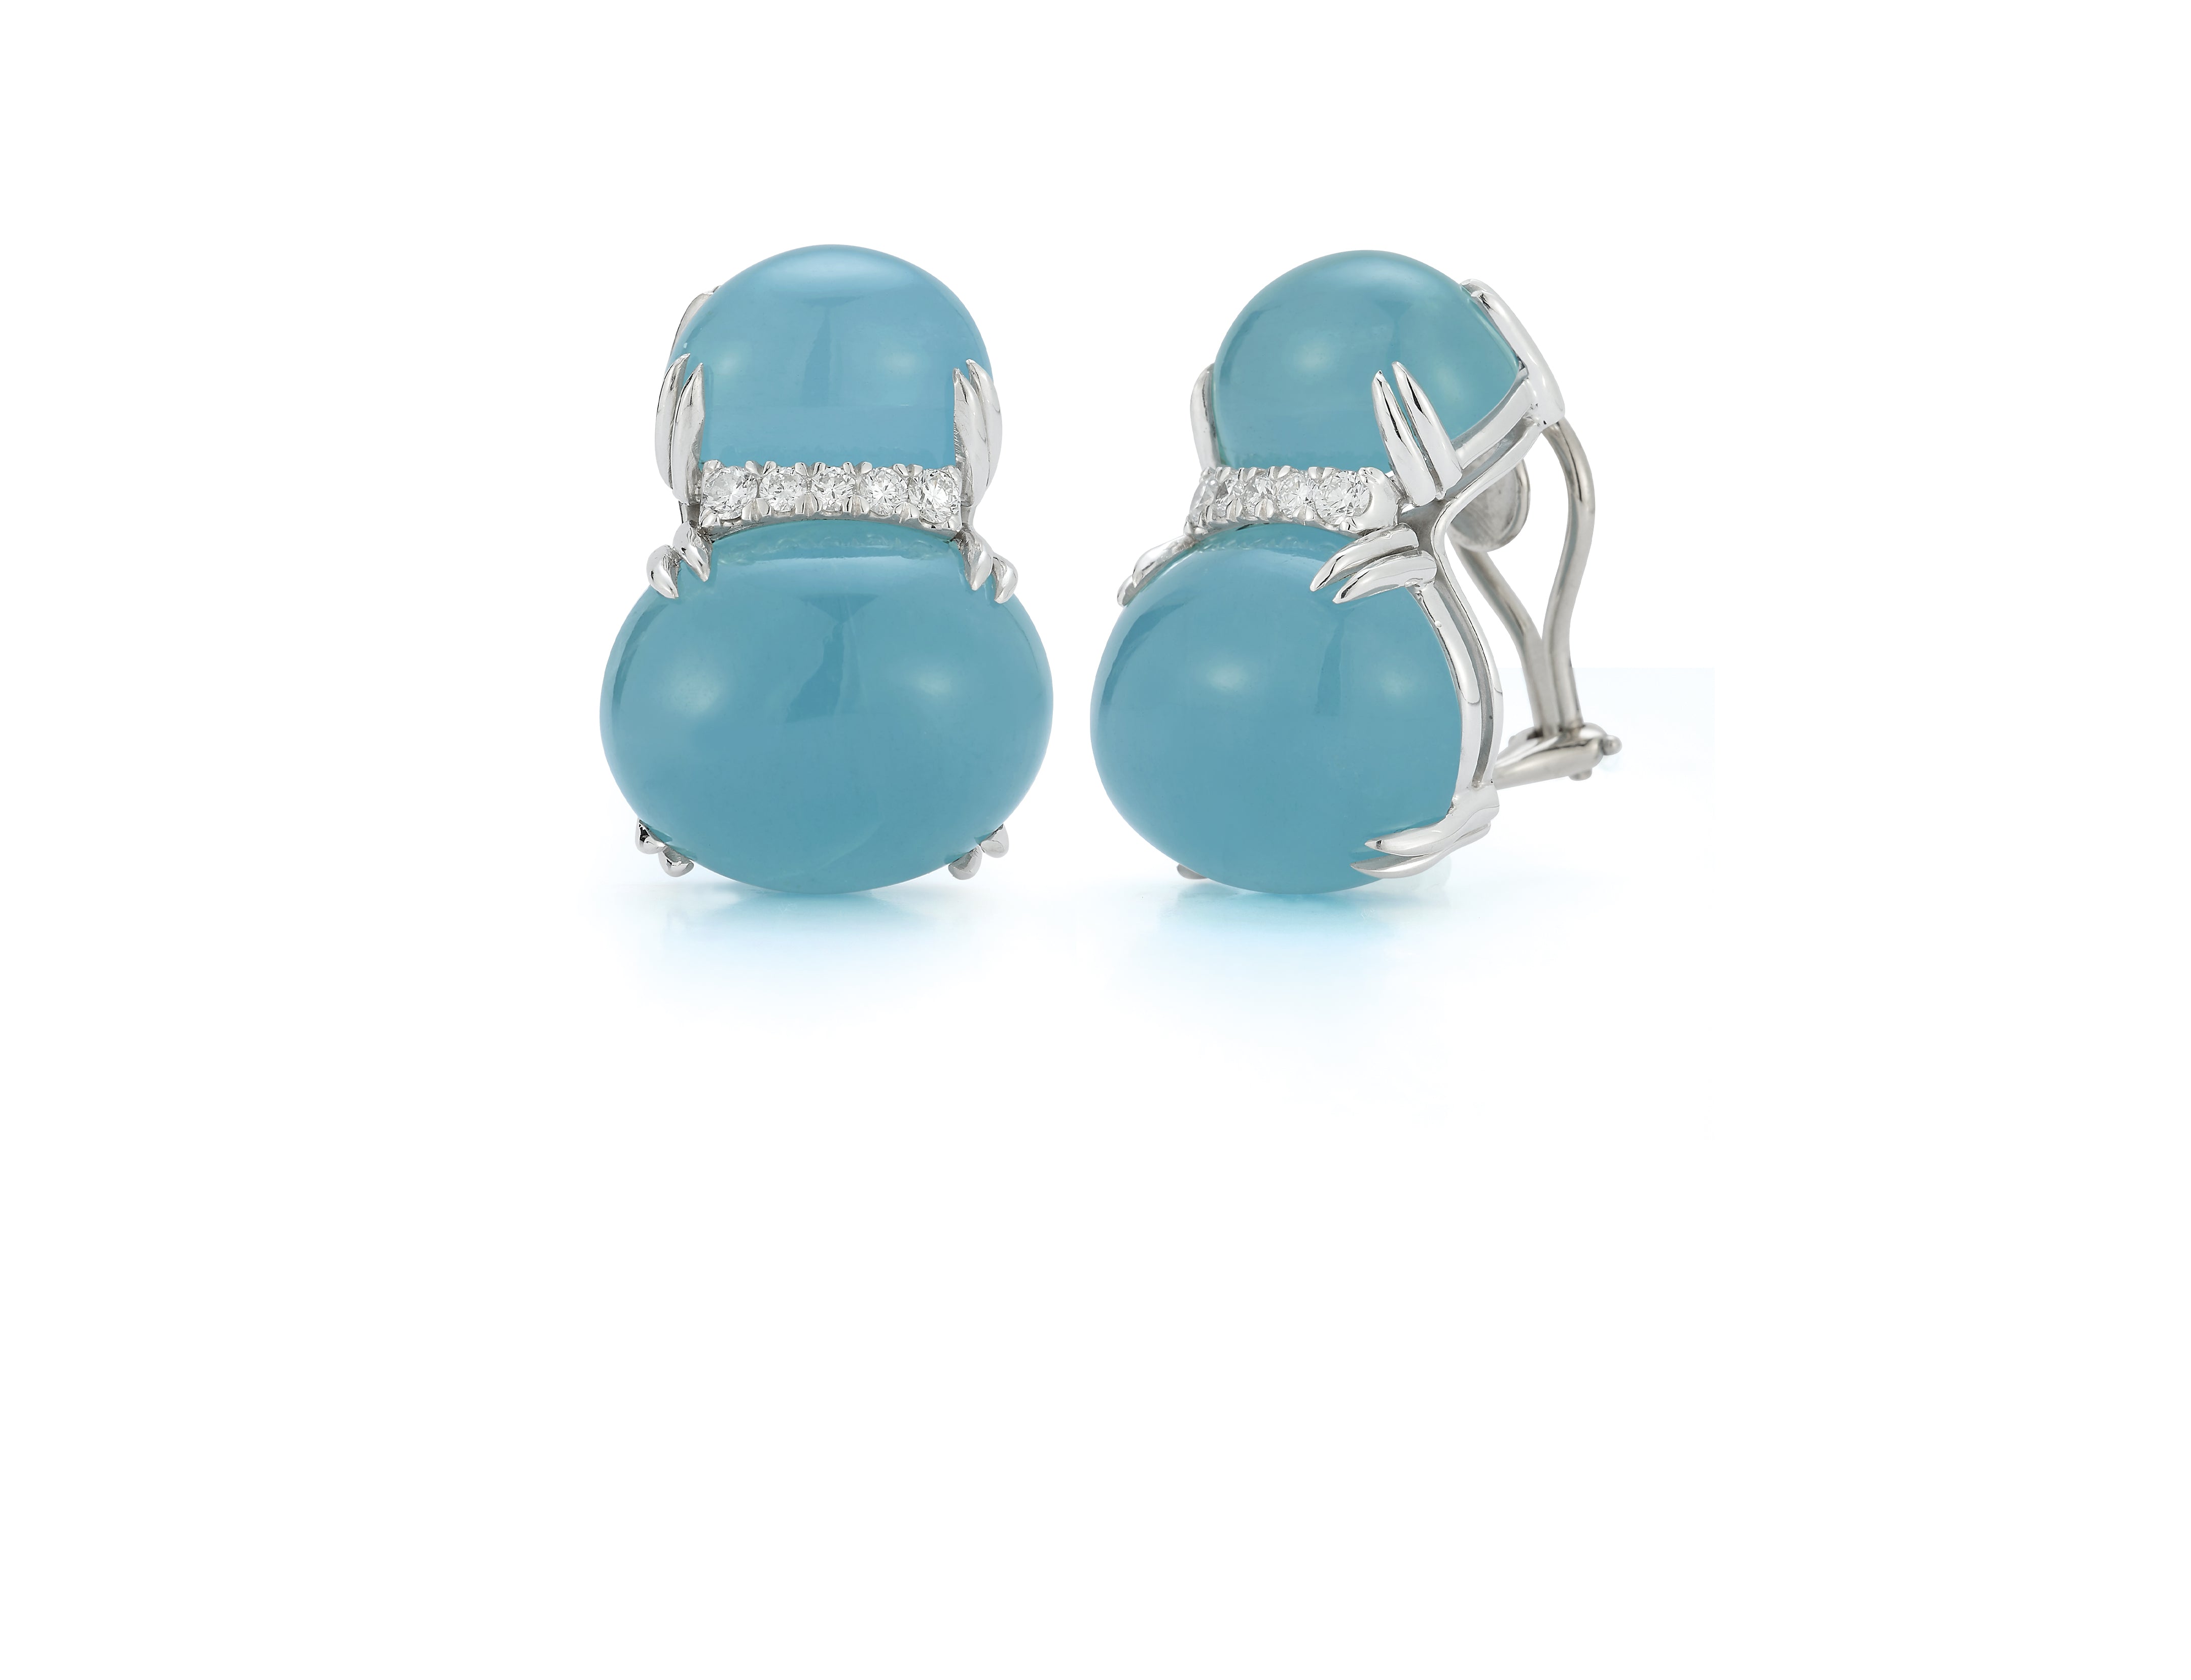 Double Cab Earrings in Aquamarine